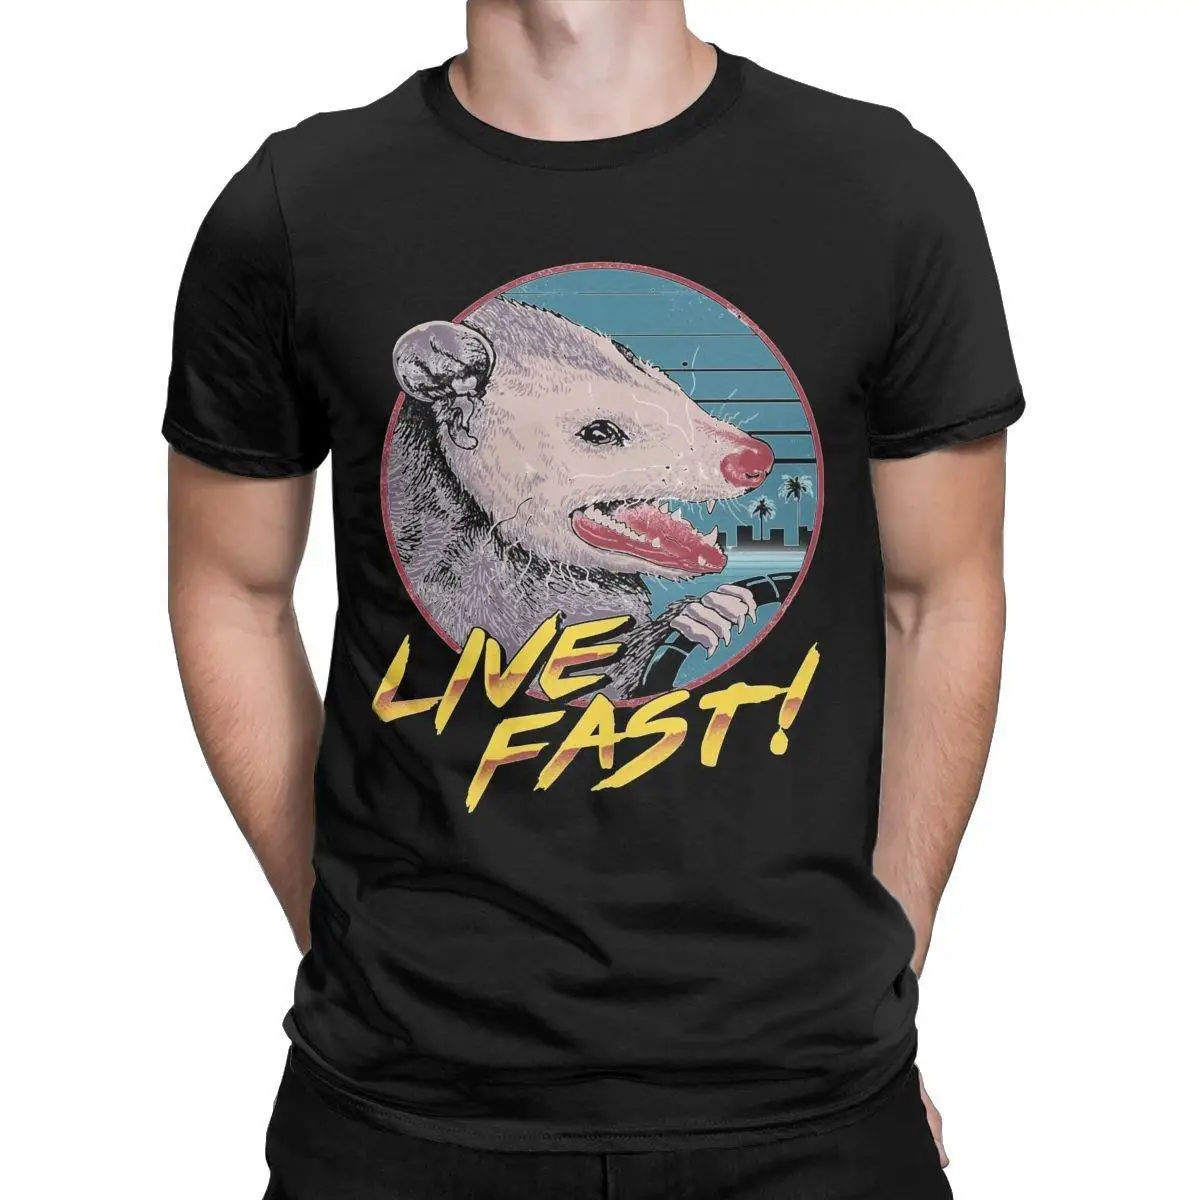 Live Fast! Eat Trash! T Shirts Men's Cotton Creative T-Shirt Crew Neck Retro Opossum Tees Short Sleeve Tops Big Size